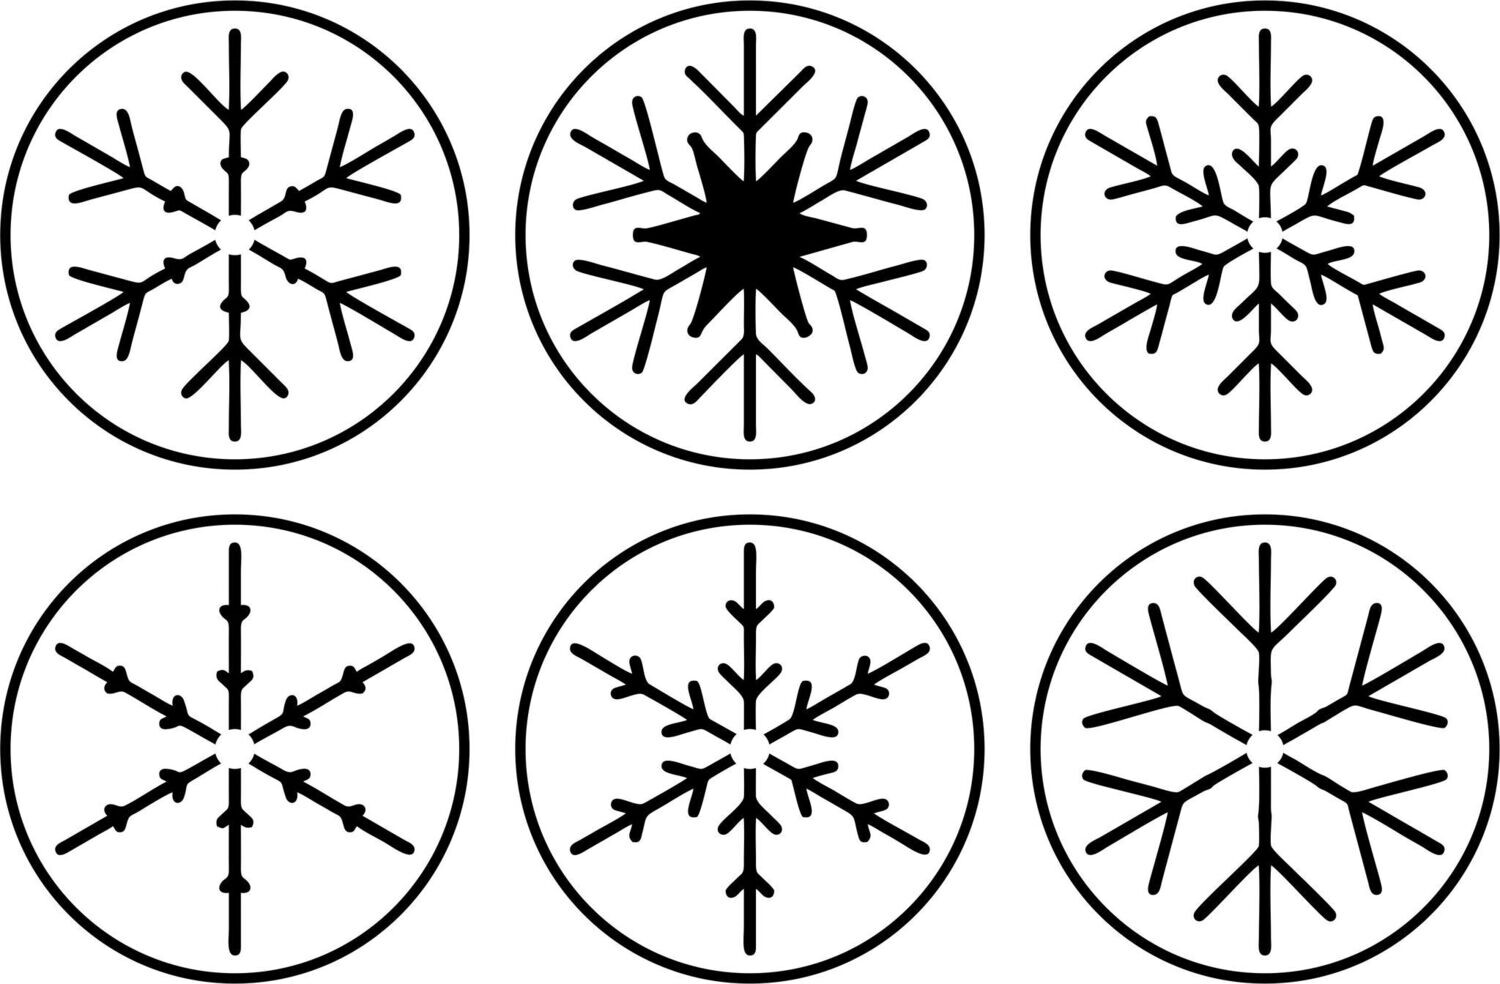 Mini Snowflakes Stencil Set of 6 by JRV